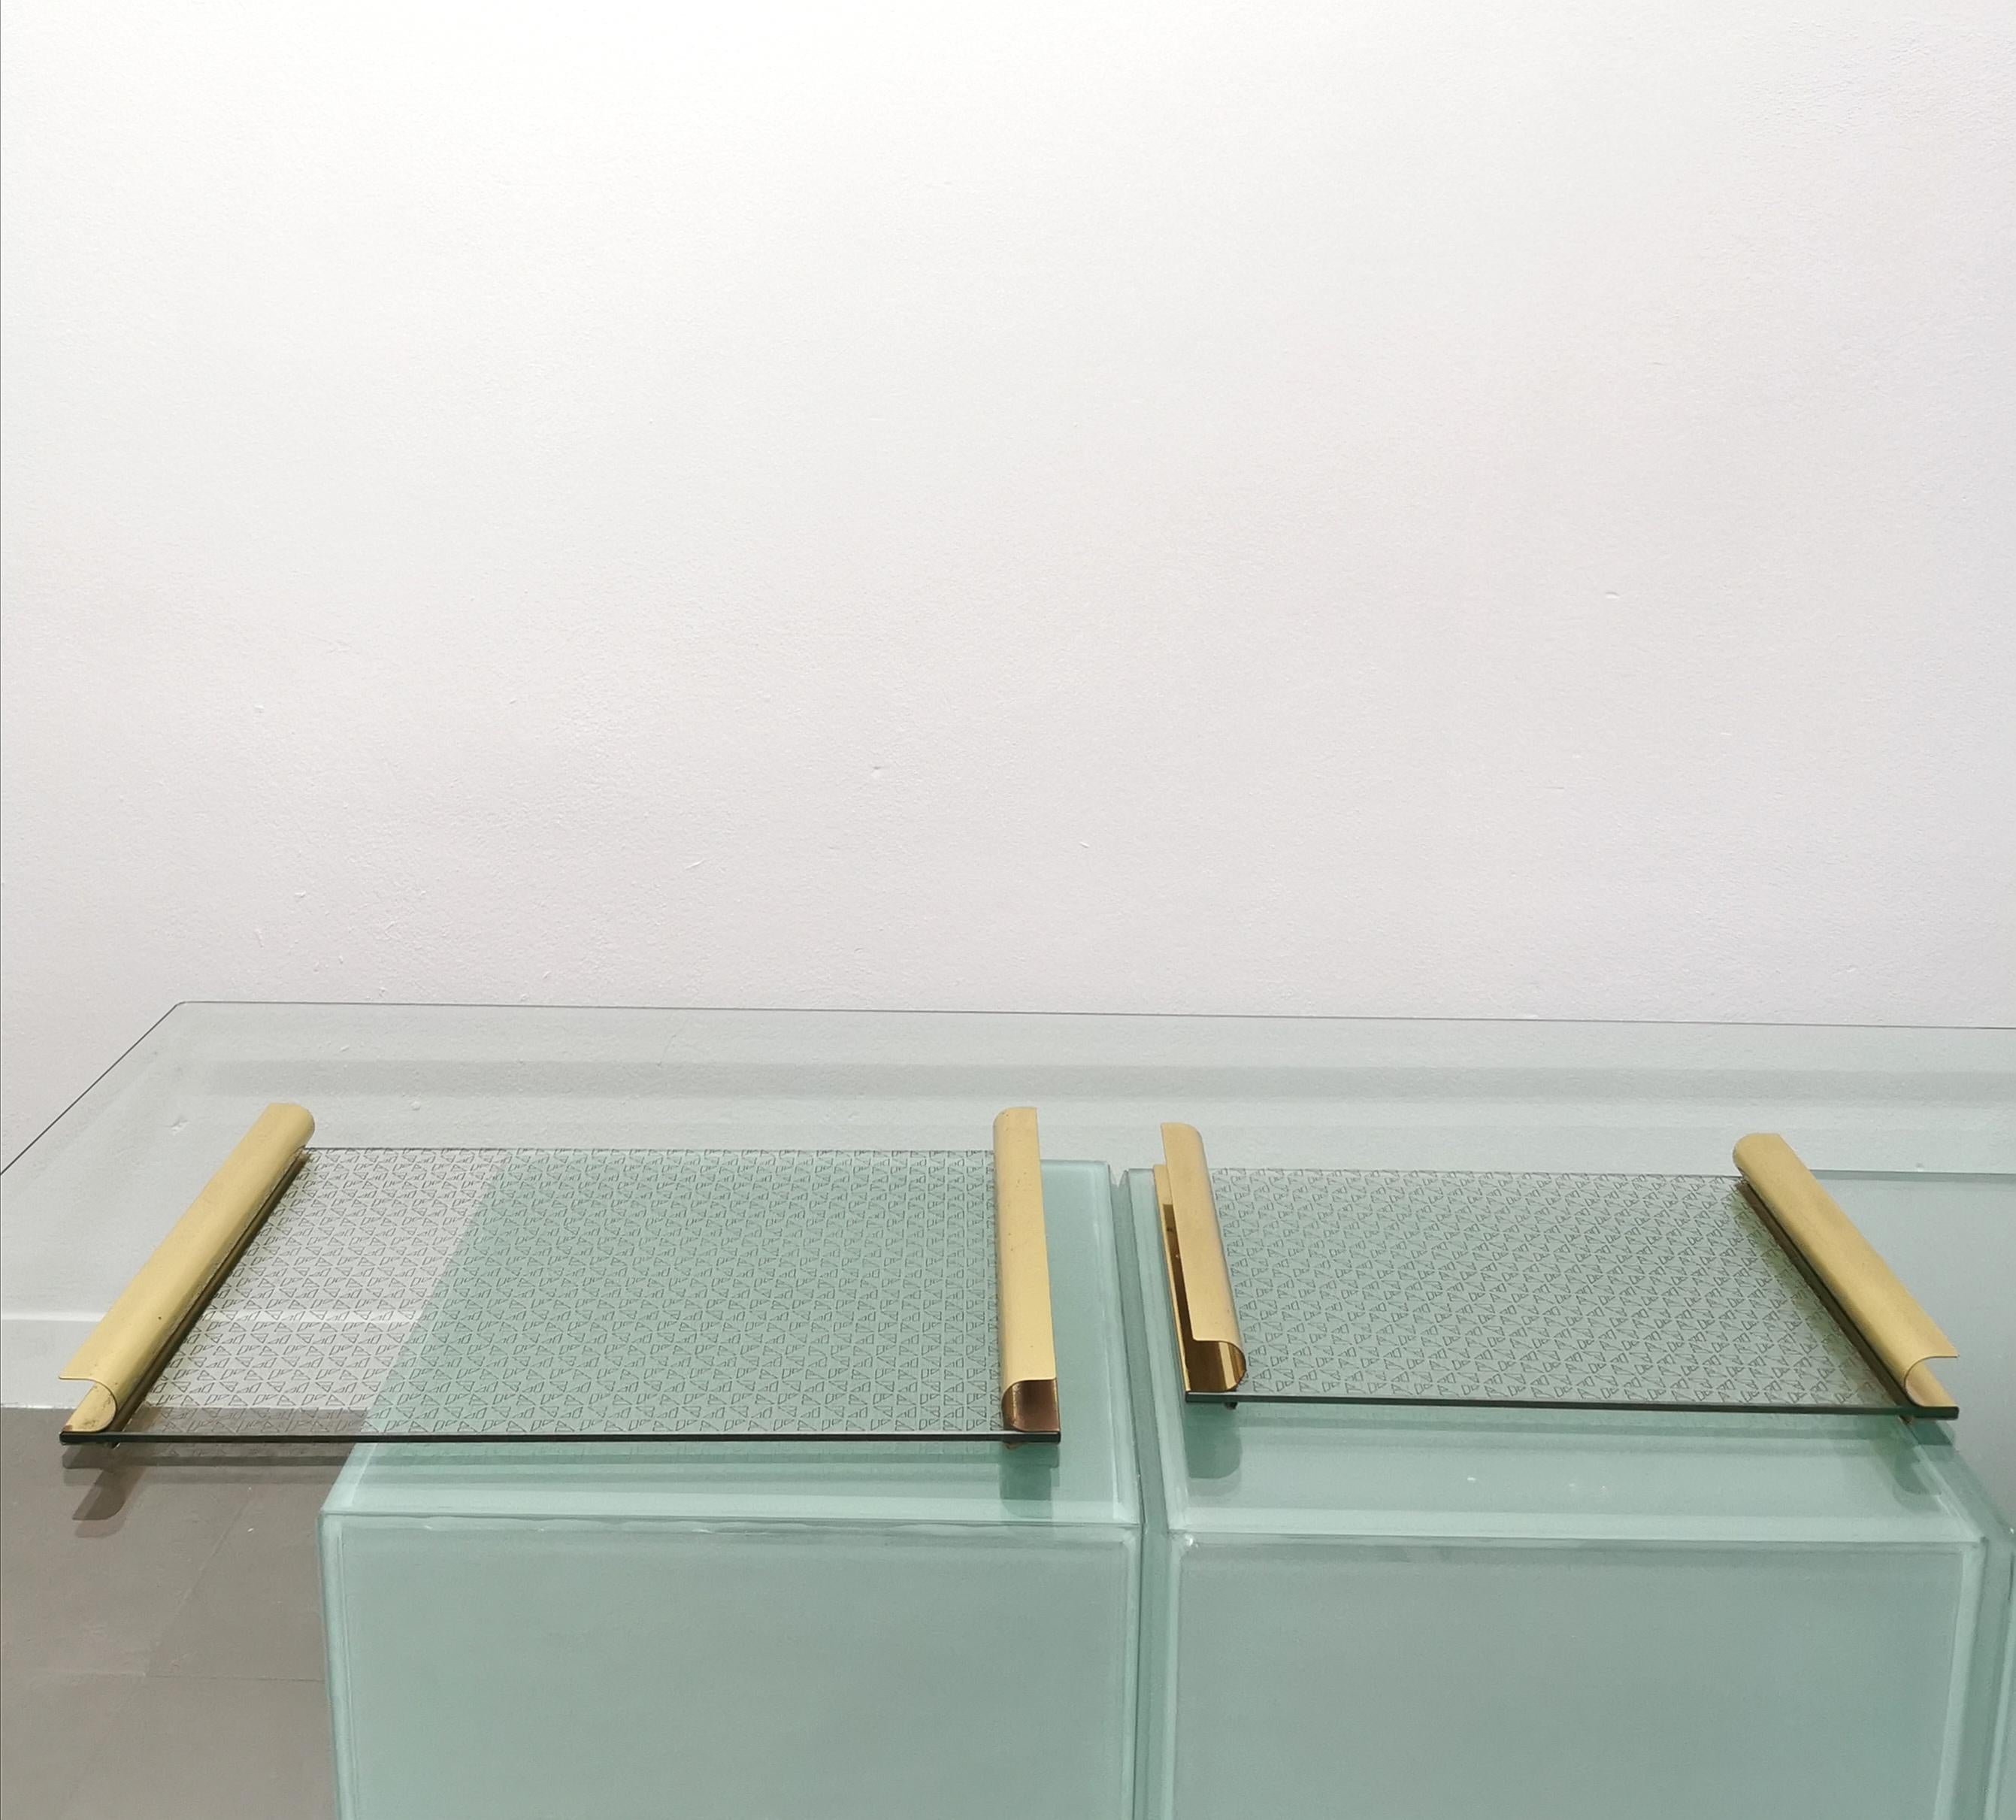 20th Century Midcentury Brass Tray Tables Glass Rectangular Italian Design 1970s Set of 2 For Sale